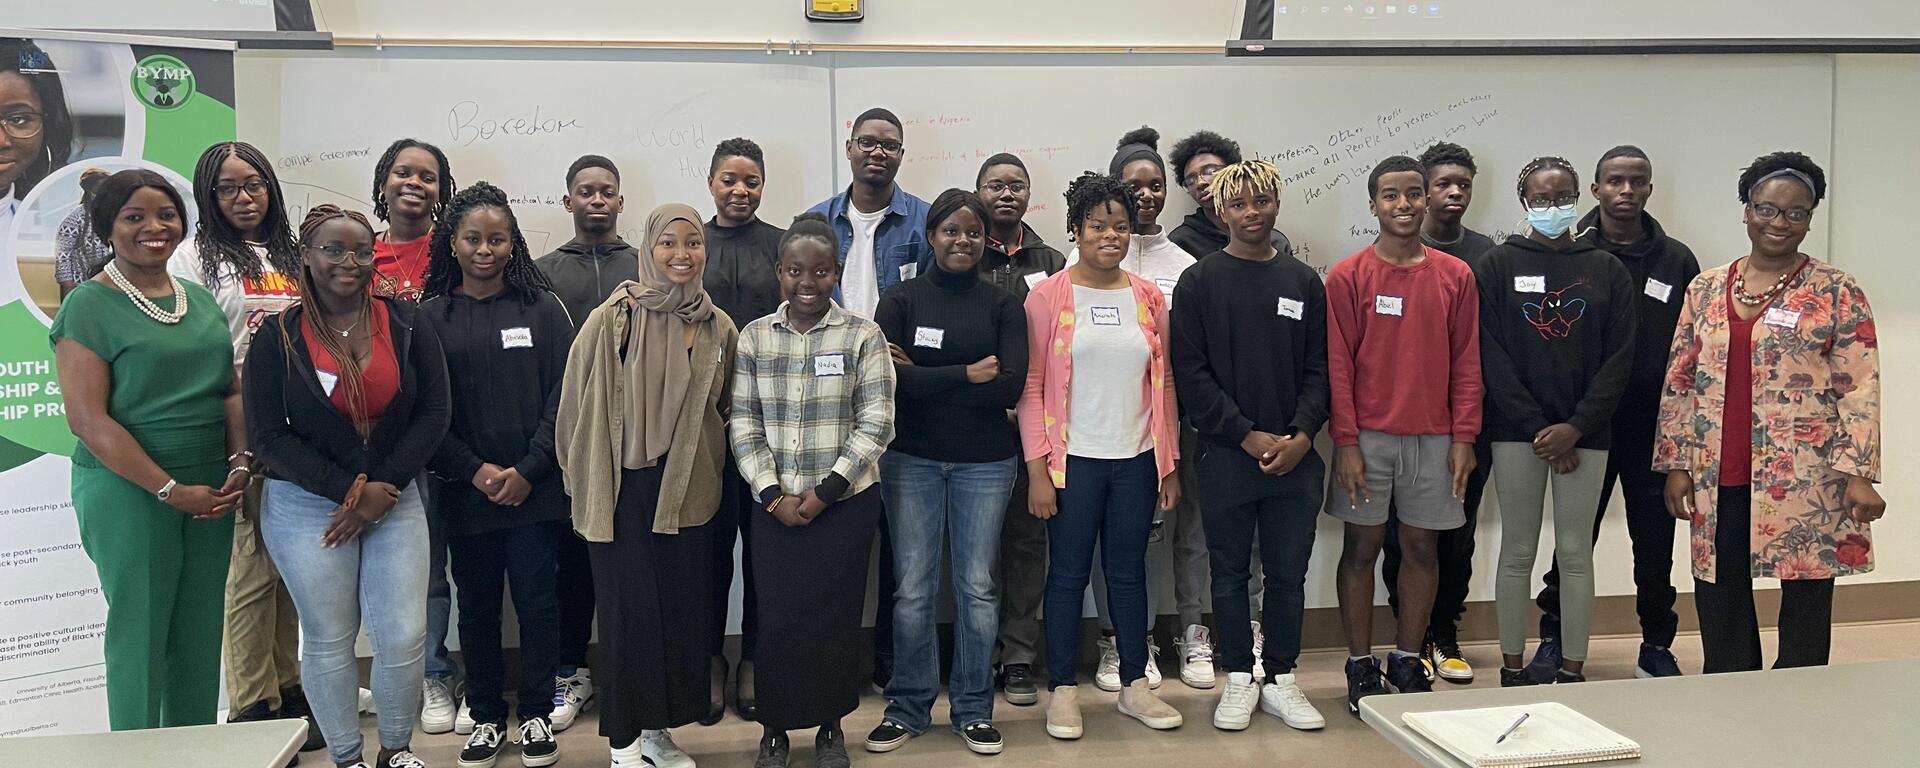 black youth leadership program group 2021